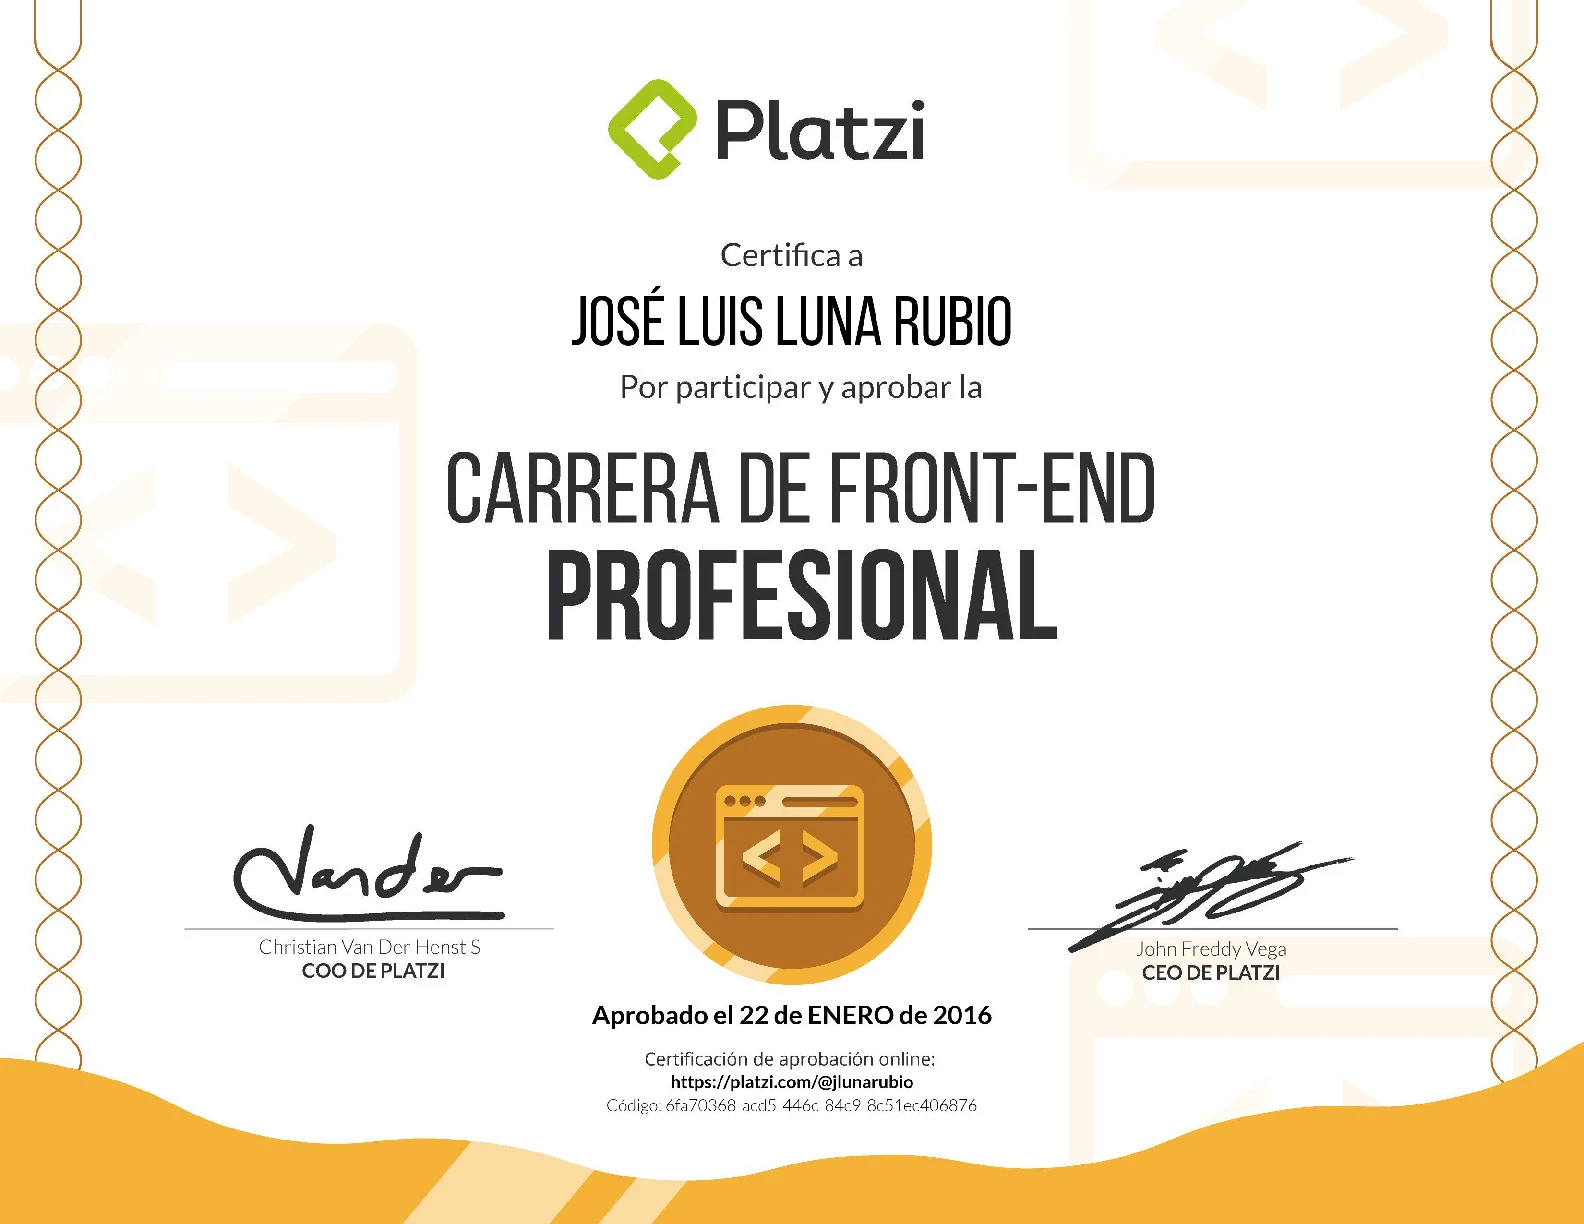 Carrera Platzi Jose Luis Luna Rubio - Frontend Profesional